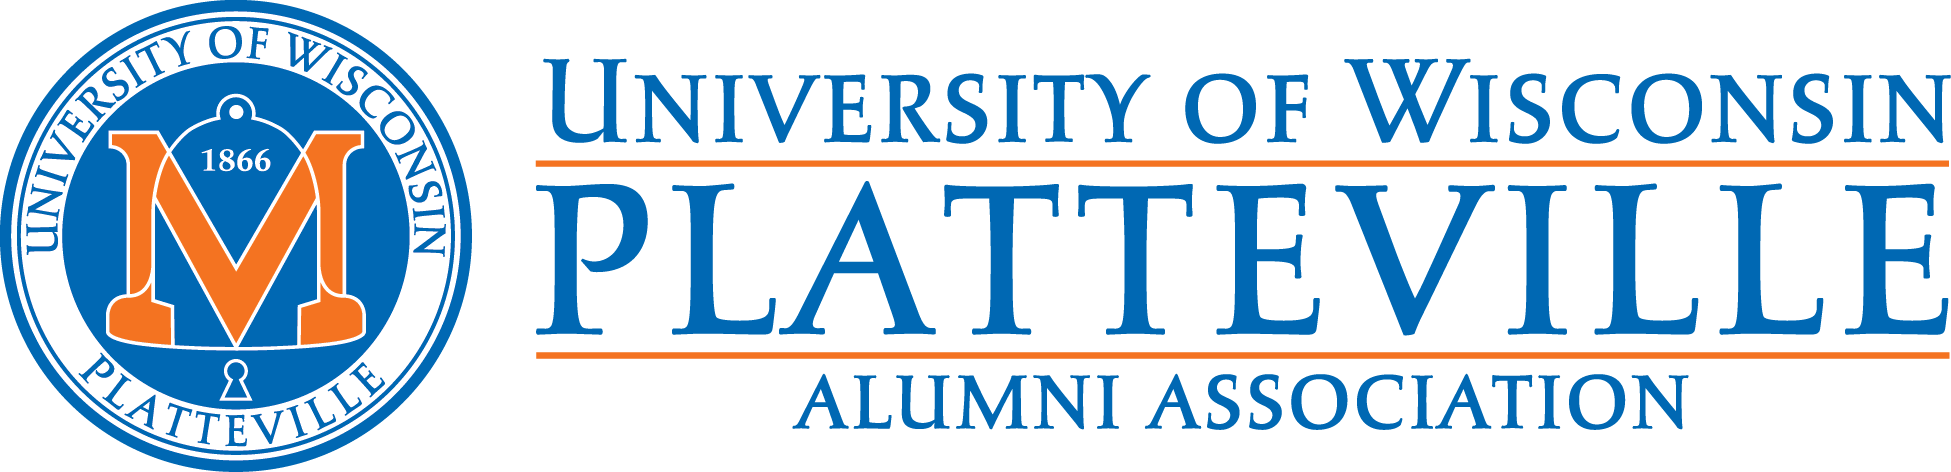 UW-Platteville Alumni Association